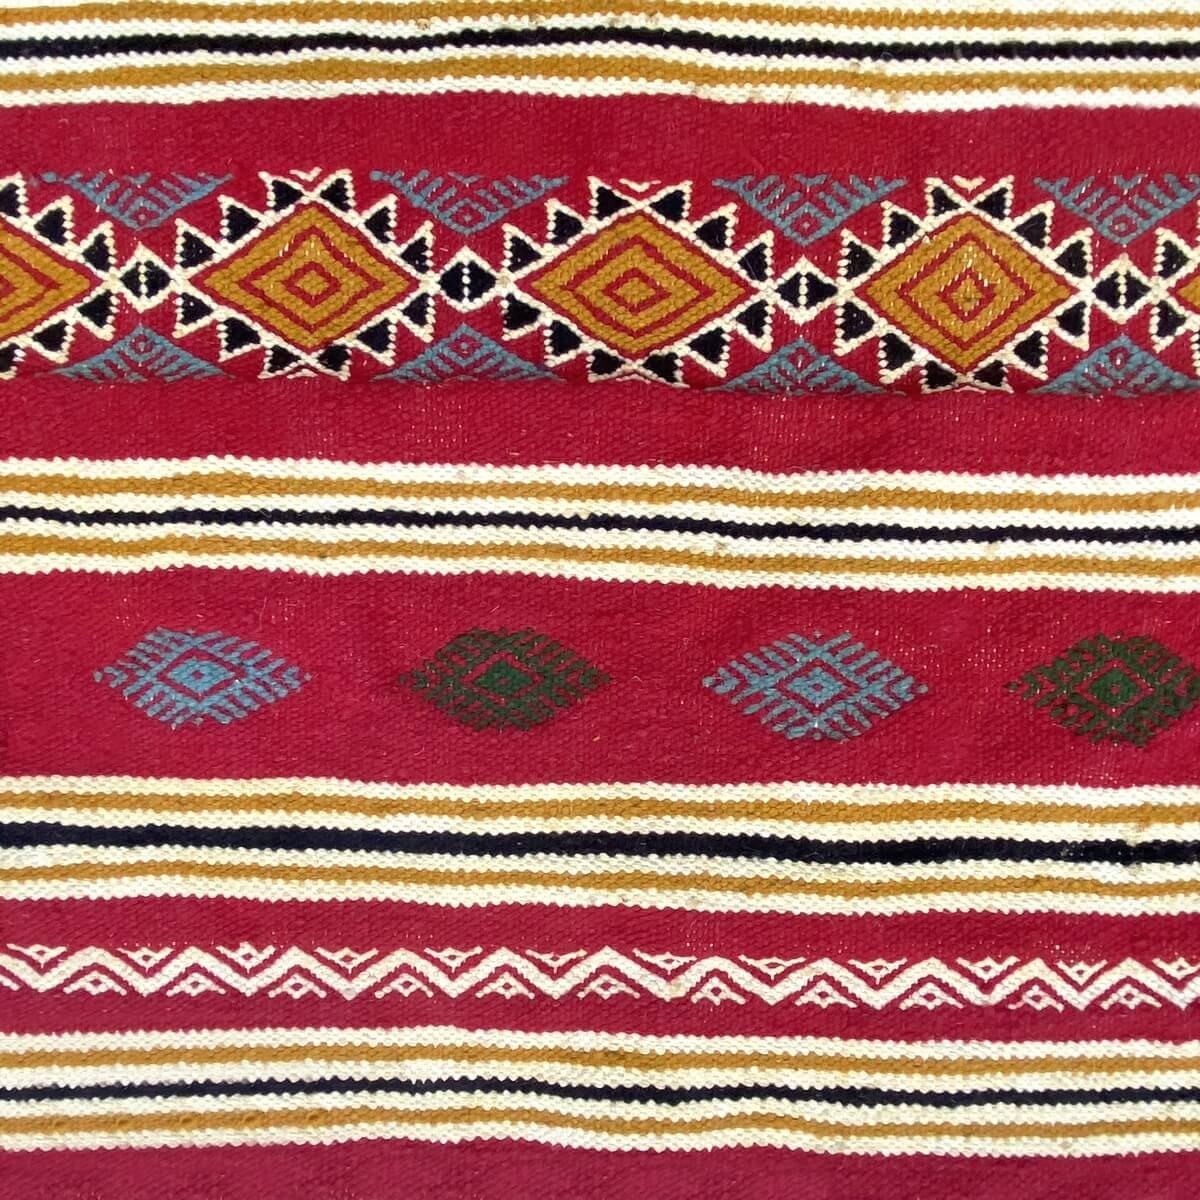 Tapete berbere Tapete Kilim Ifta 116x205 Vermelho/Laranja (Tecidos à mão, Lã, Tunísia) Tapete tunisiano kilim, estilo marroquino